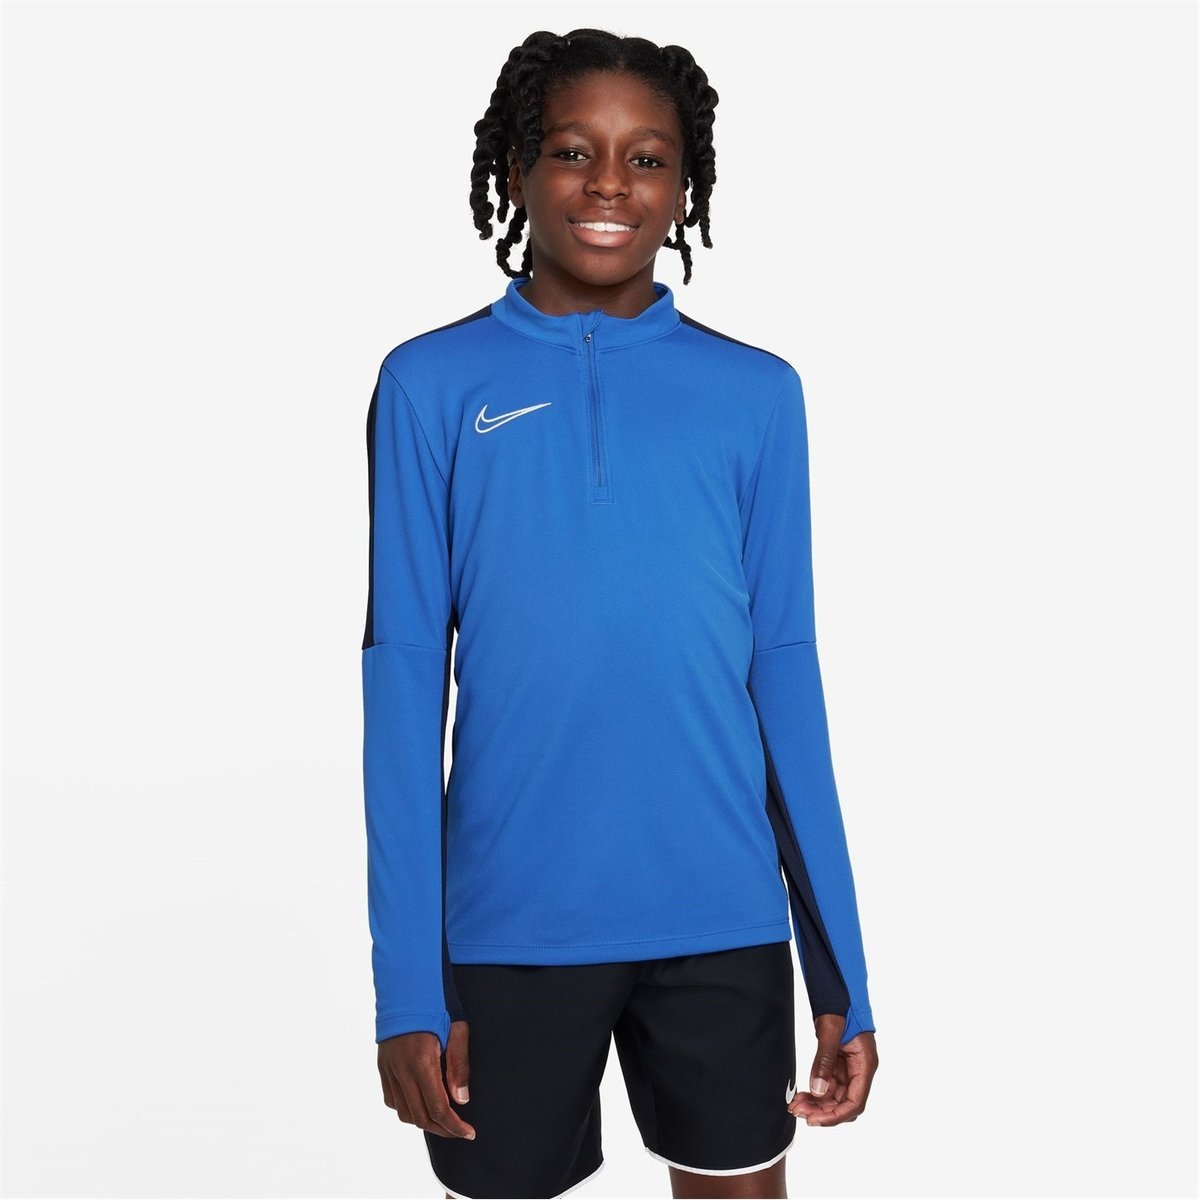 Nike Football Jackets - all